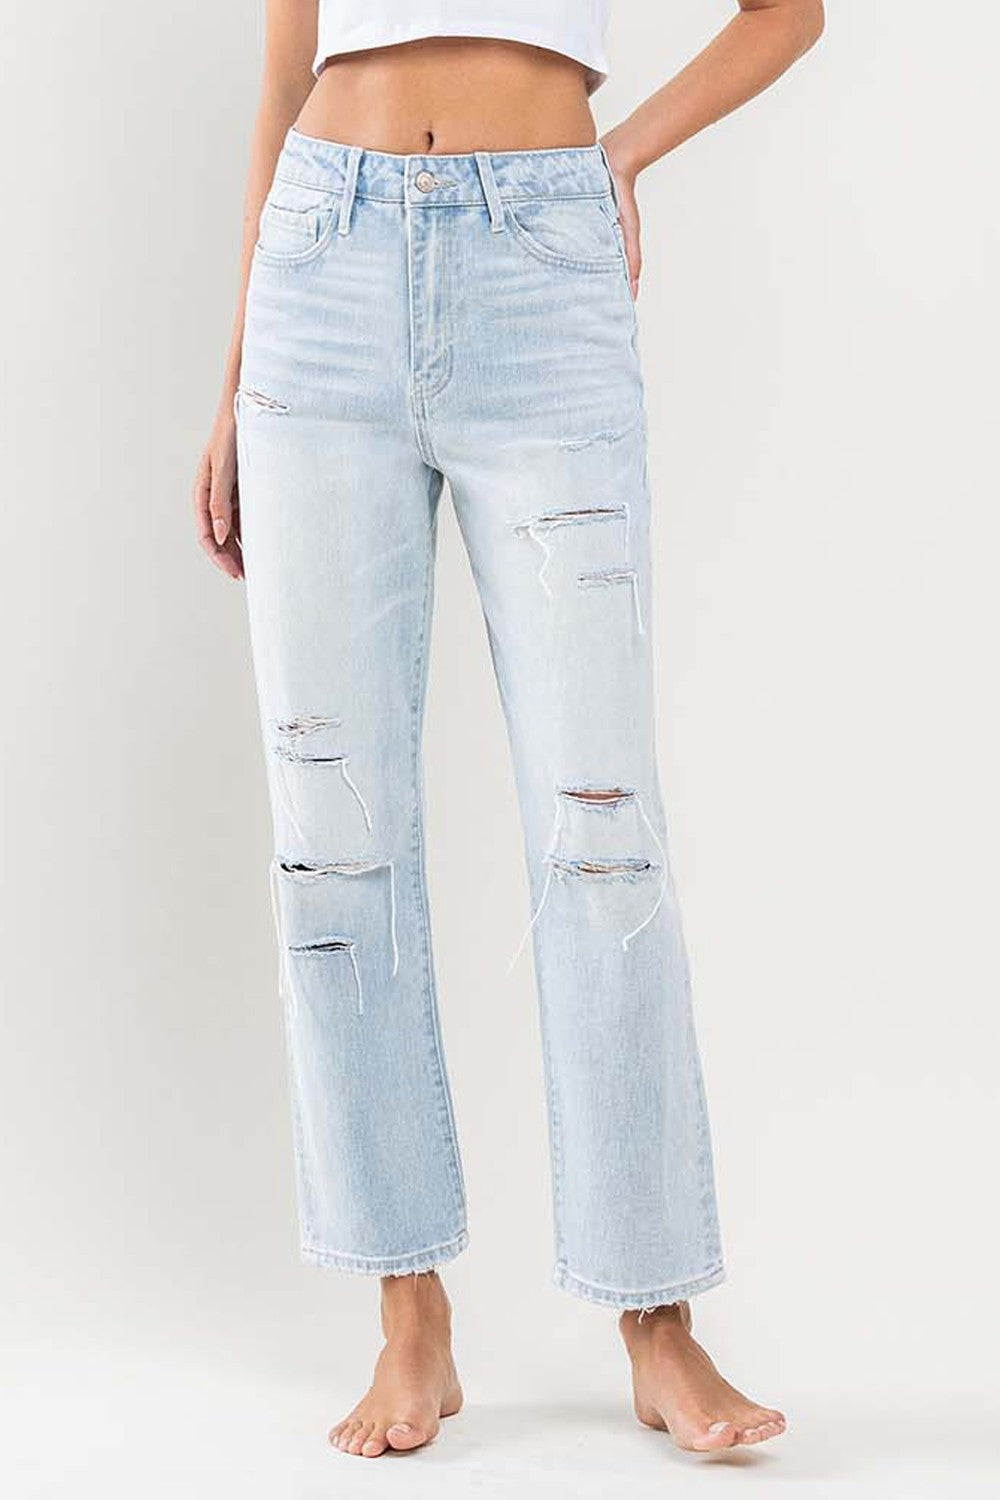 Vervet Super High Rise Light Wash Distressed Crop Straight Jeans